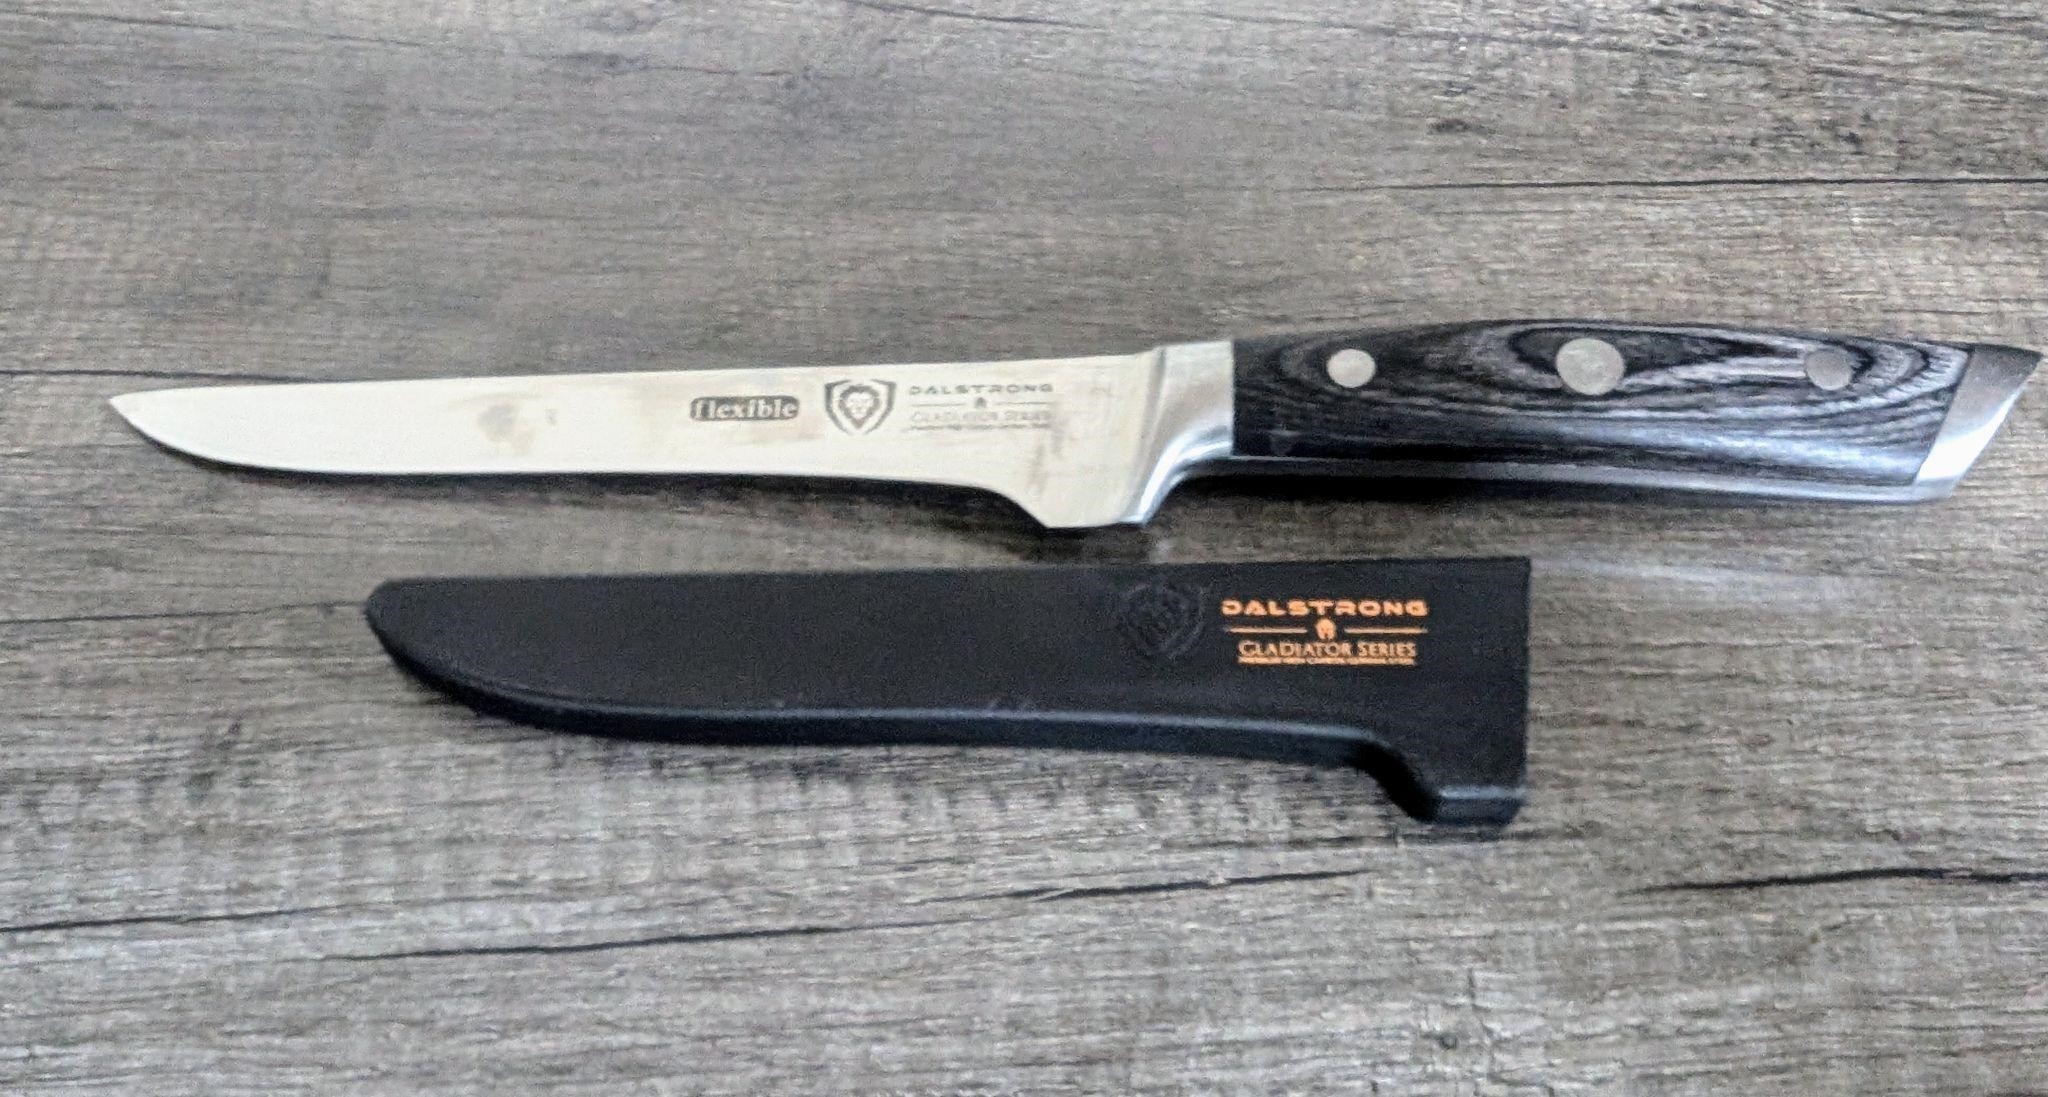 Dalstrong Gladiator Series Premium German Knife